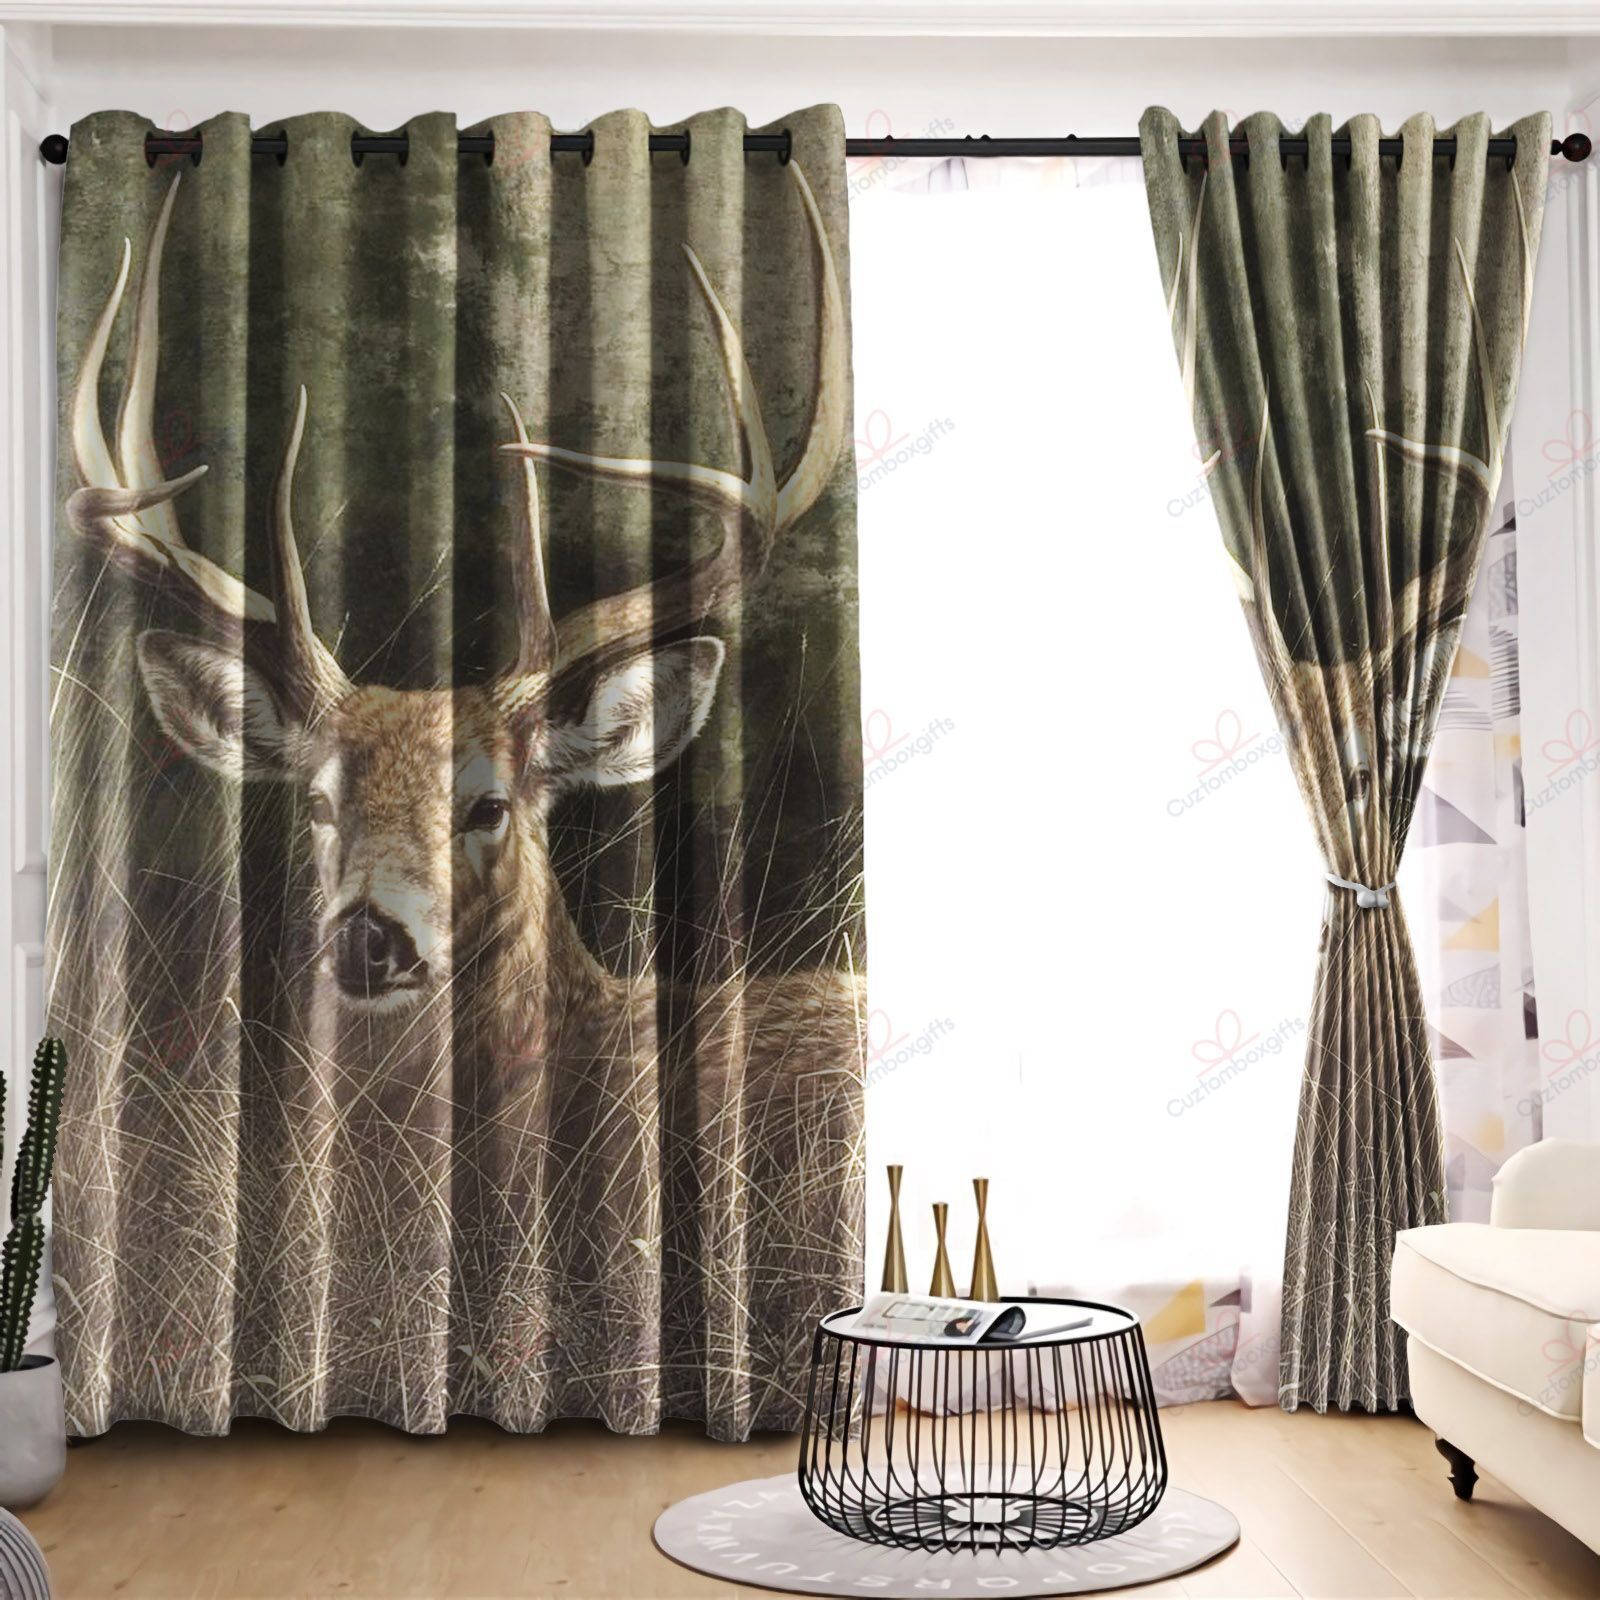 Deer Printed Window Curtains Home Decor